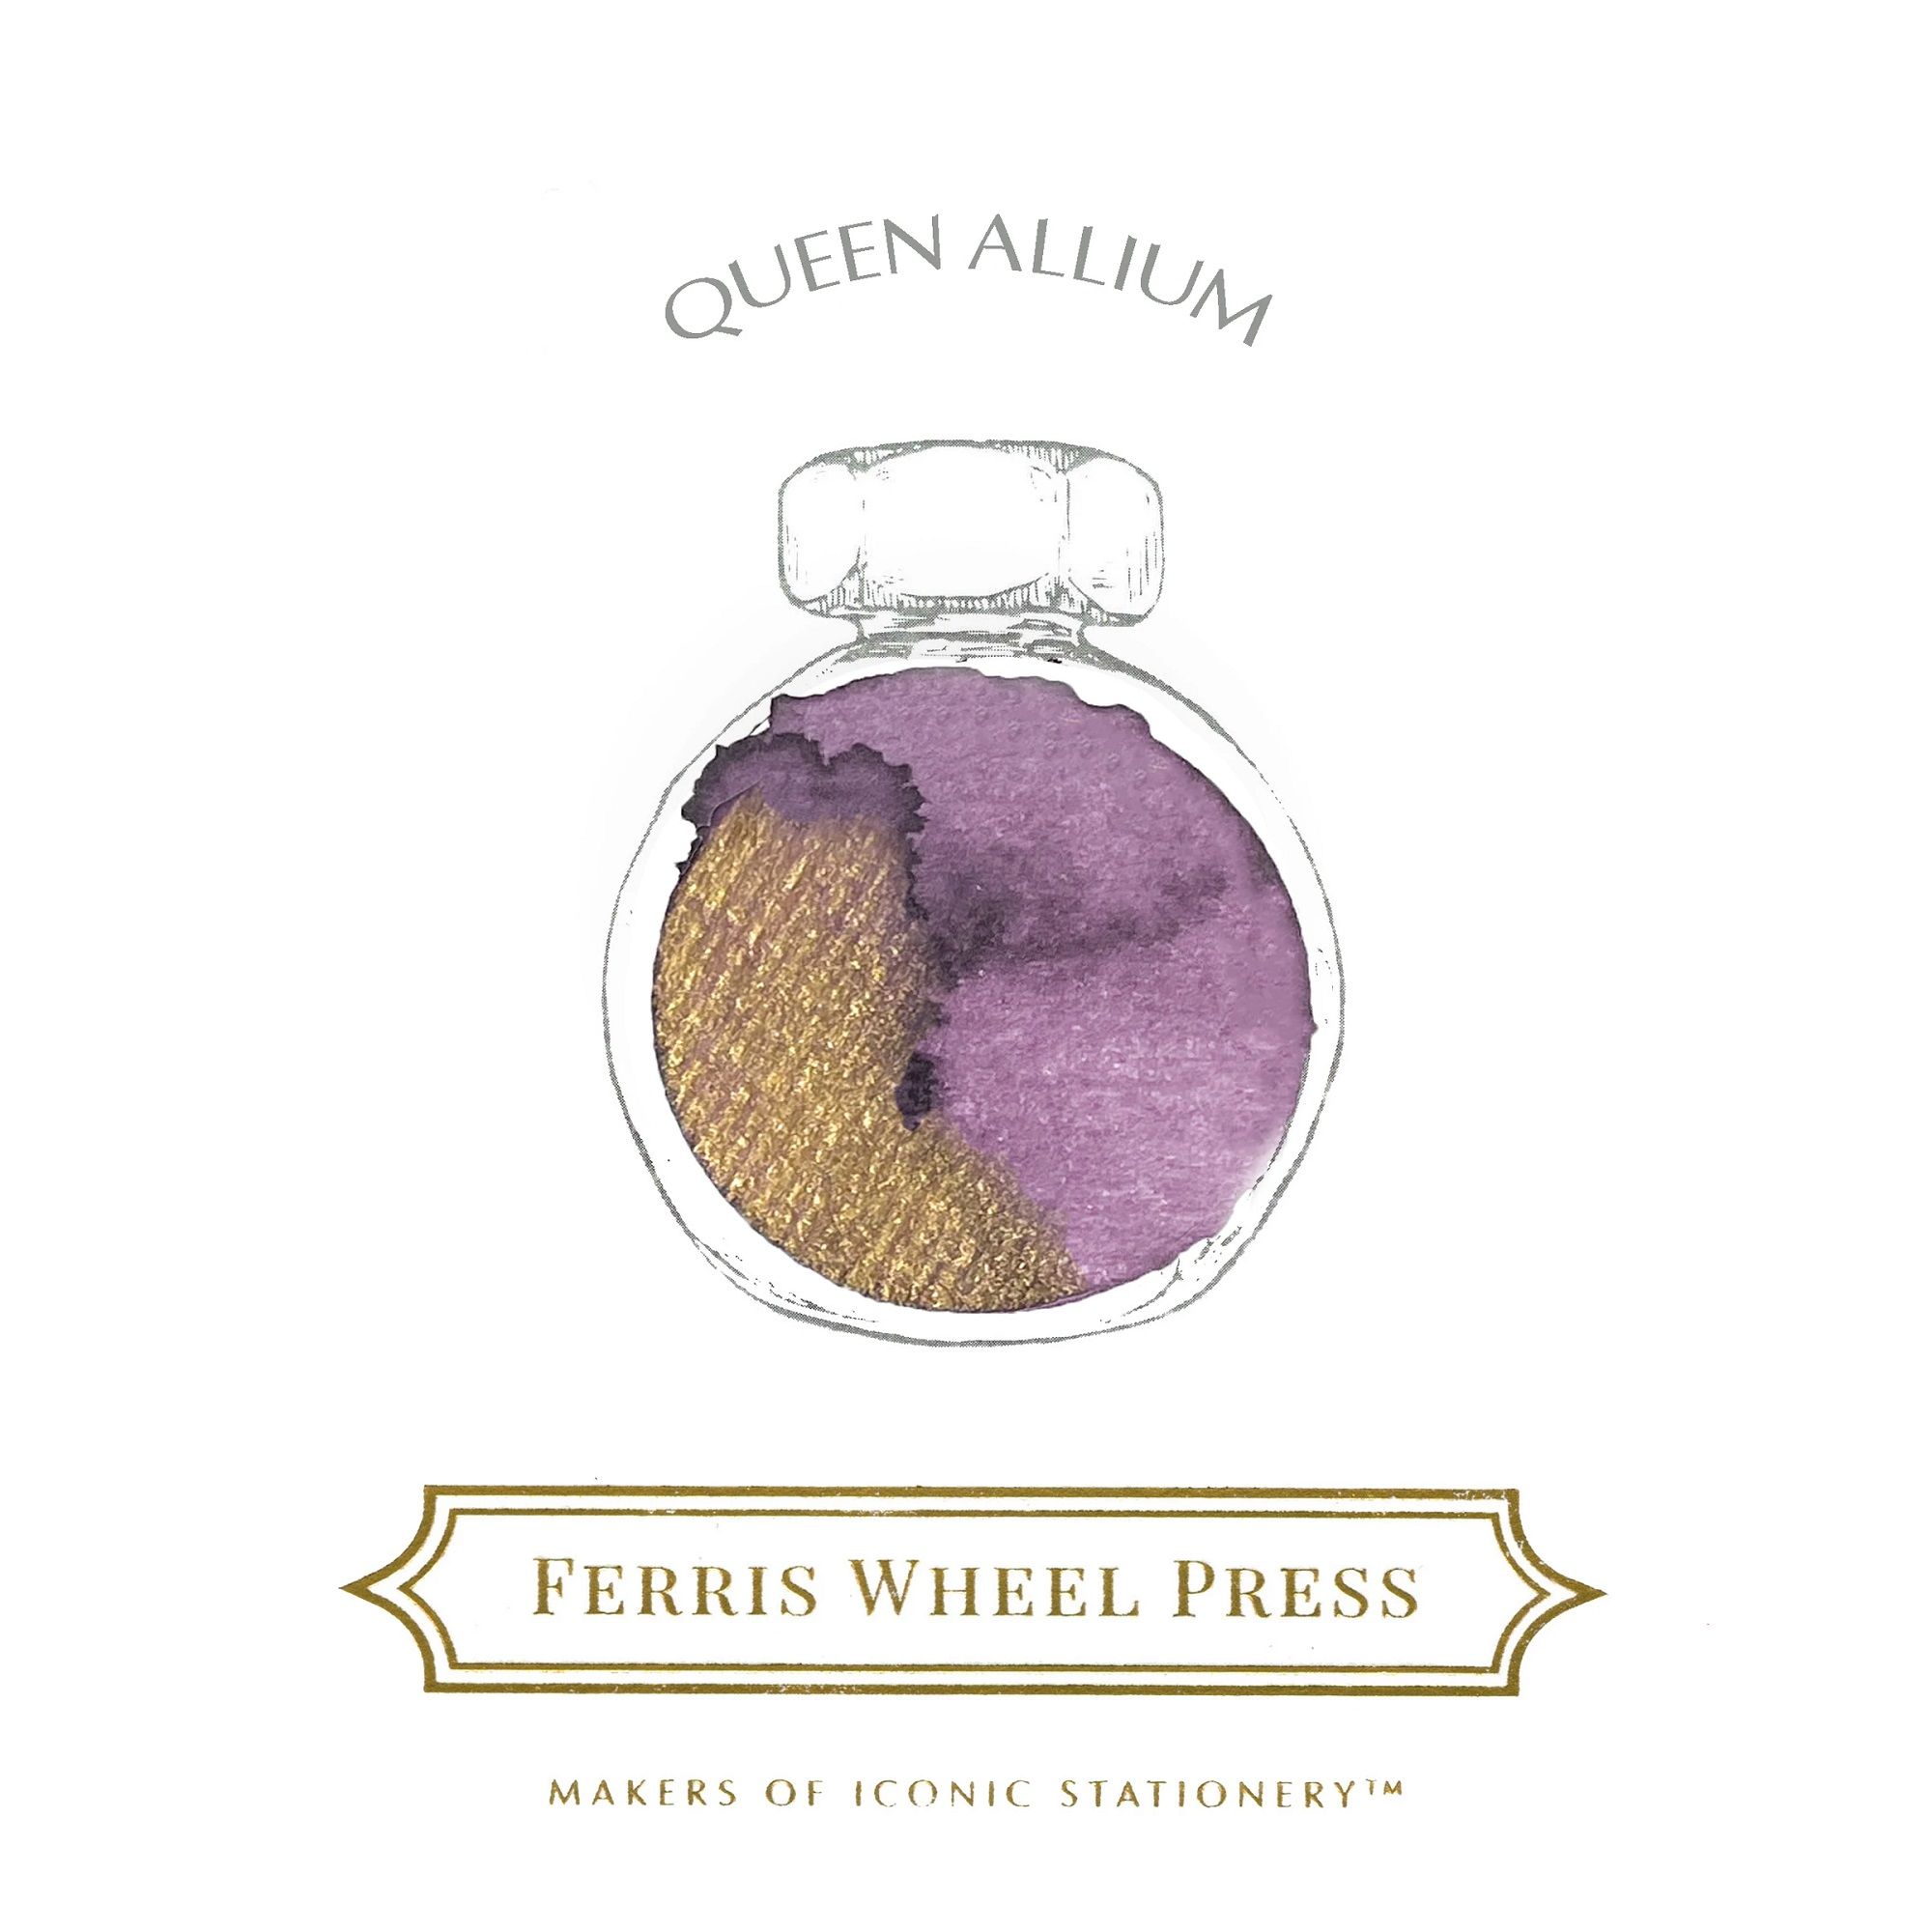 Ferris Wheel Press 38ml Bottled Fountain Pen Inks - Queen Allium